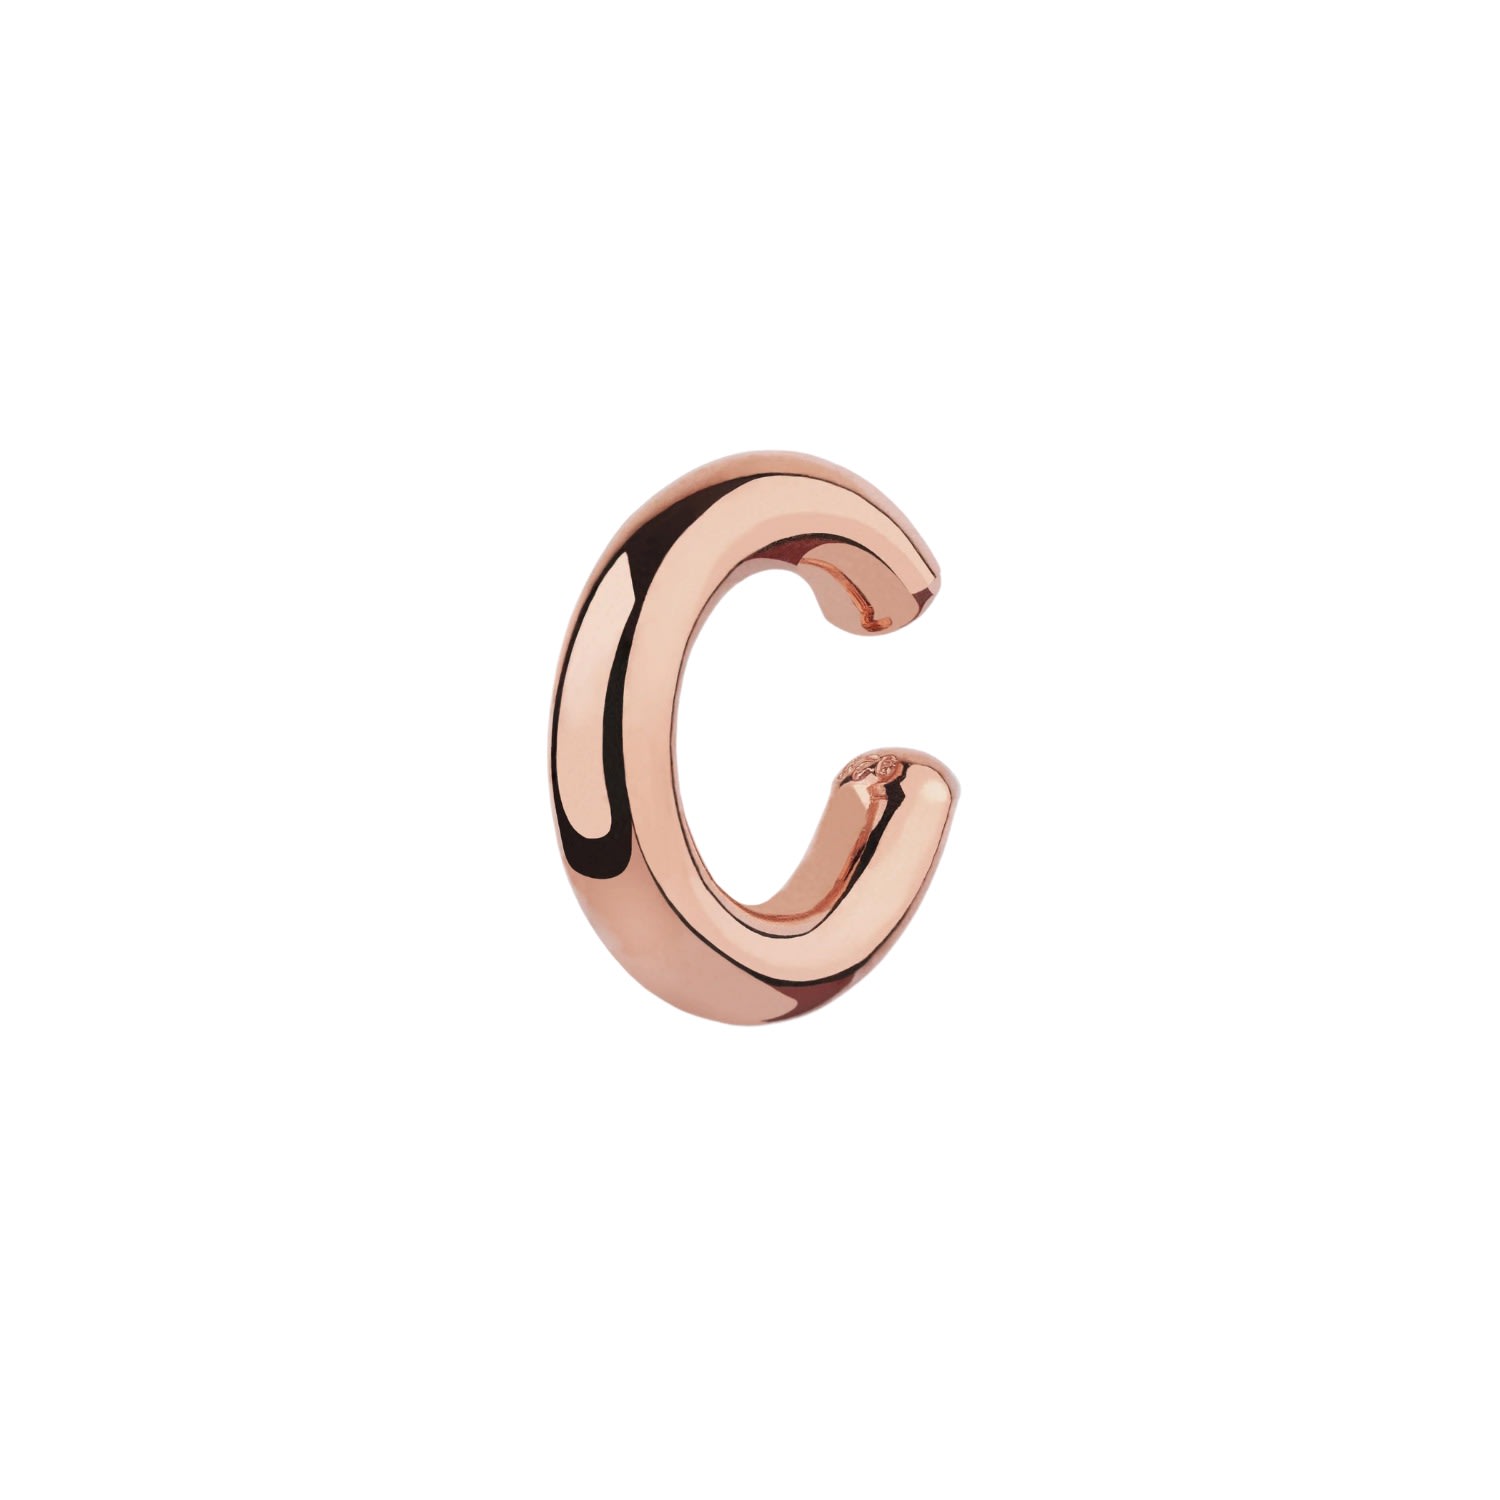 Spero London Women's Chunky Sterling Silver Ear Cuff No Piercing 1 Piece - Rose Gold